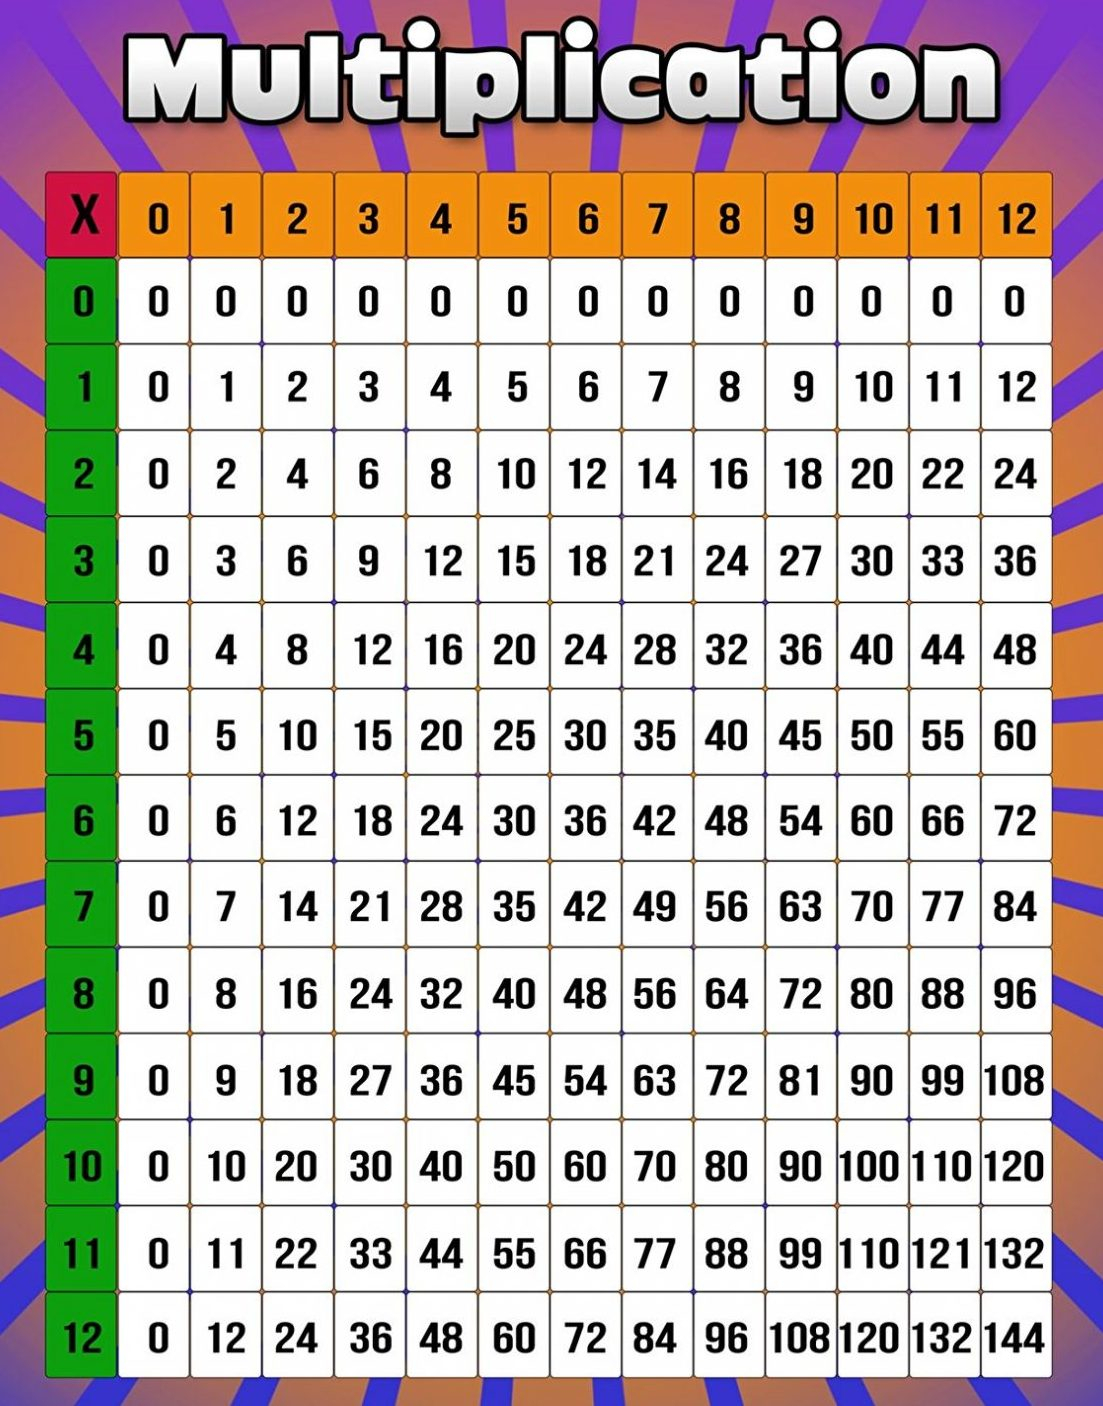 multiplication tables pdf download